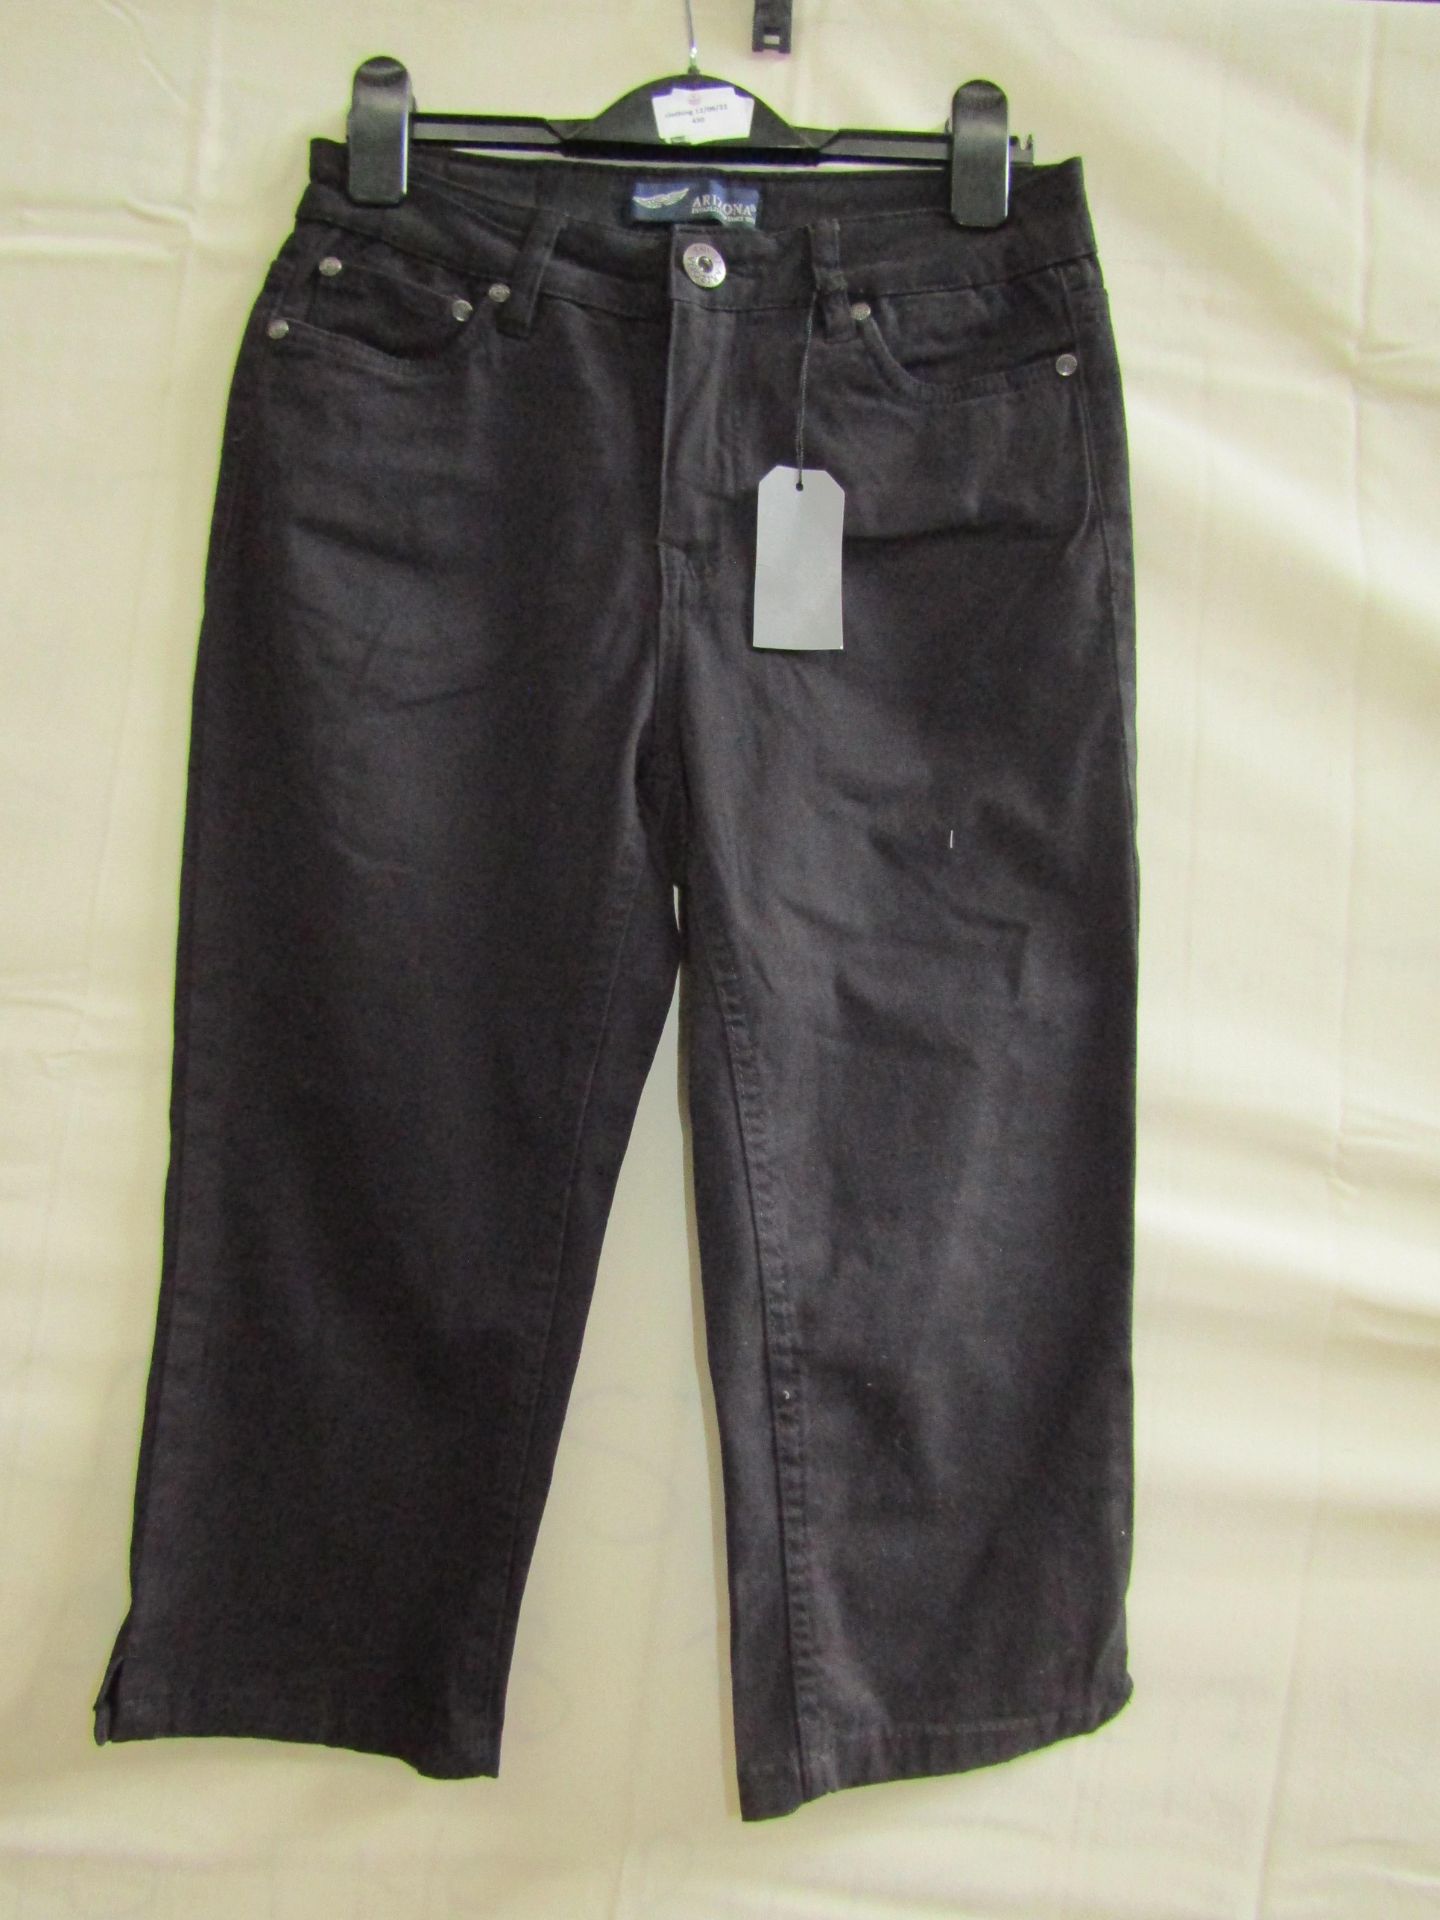 Arizonia Black 3/4 Length Shorts Size 12 New With Tags